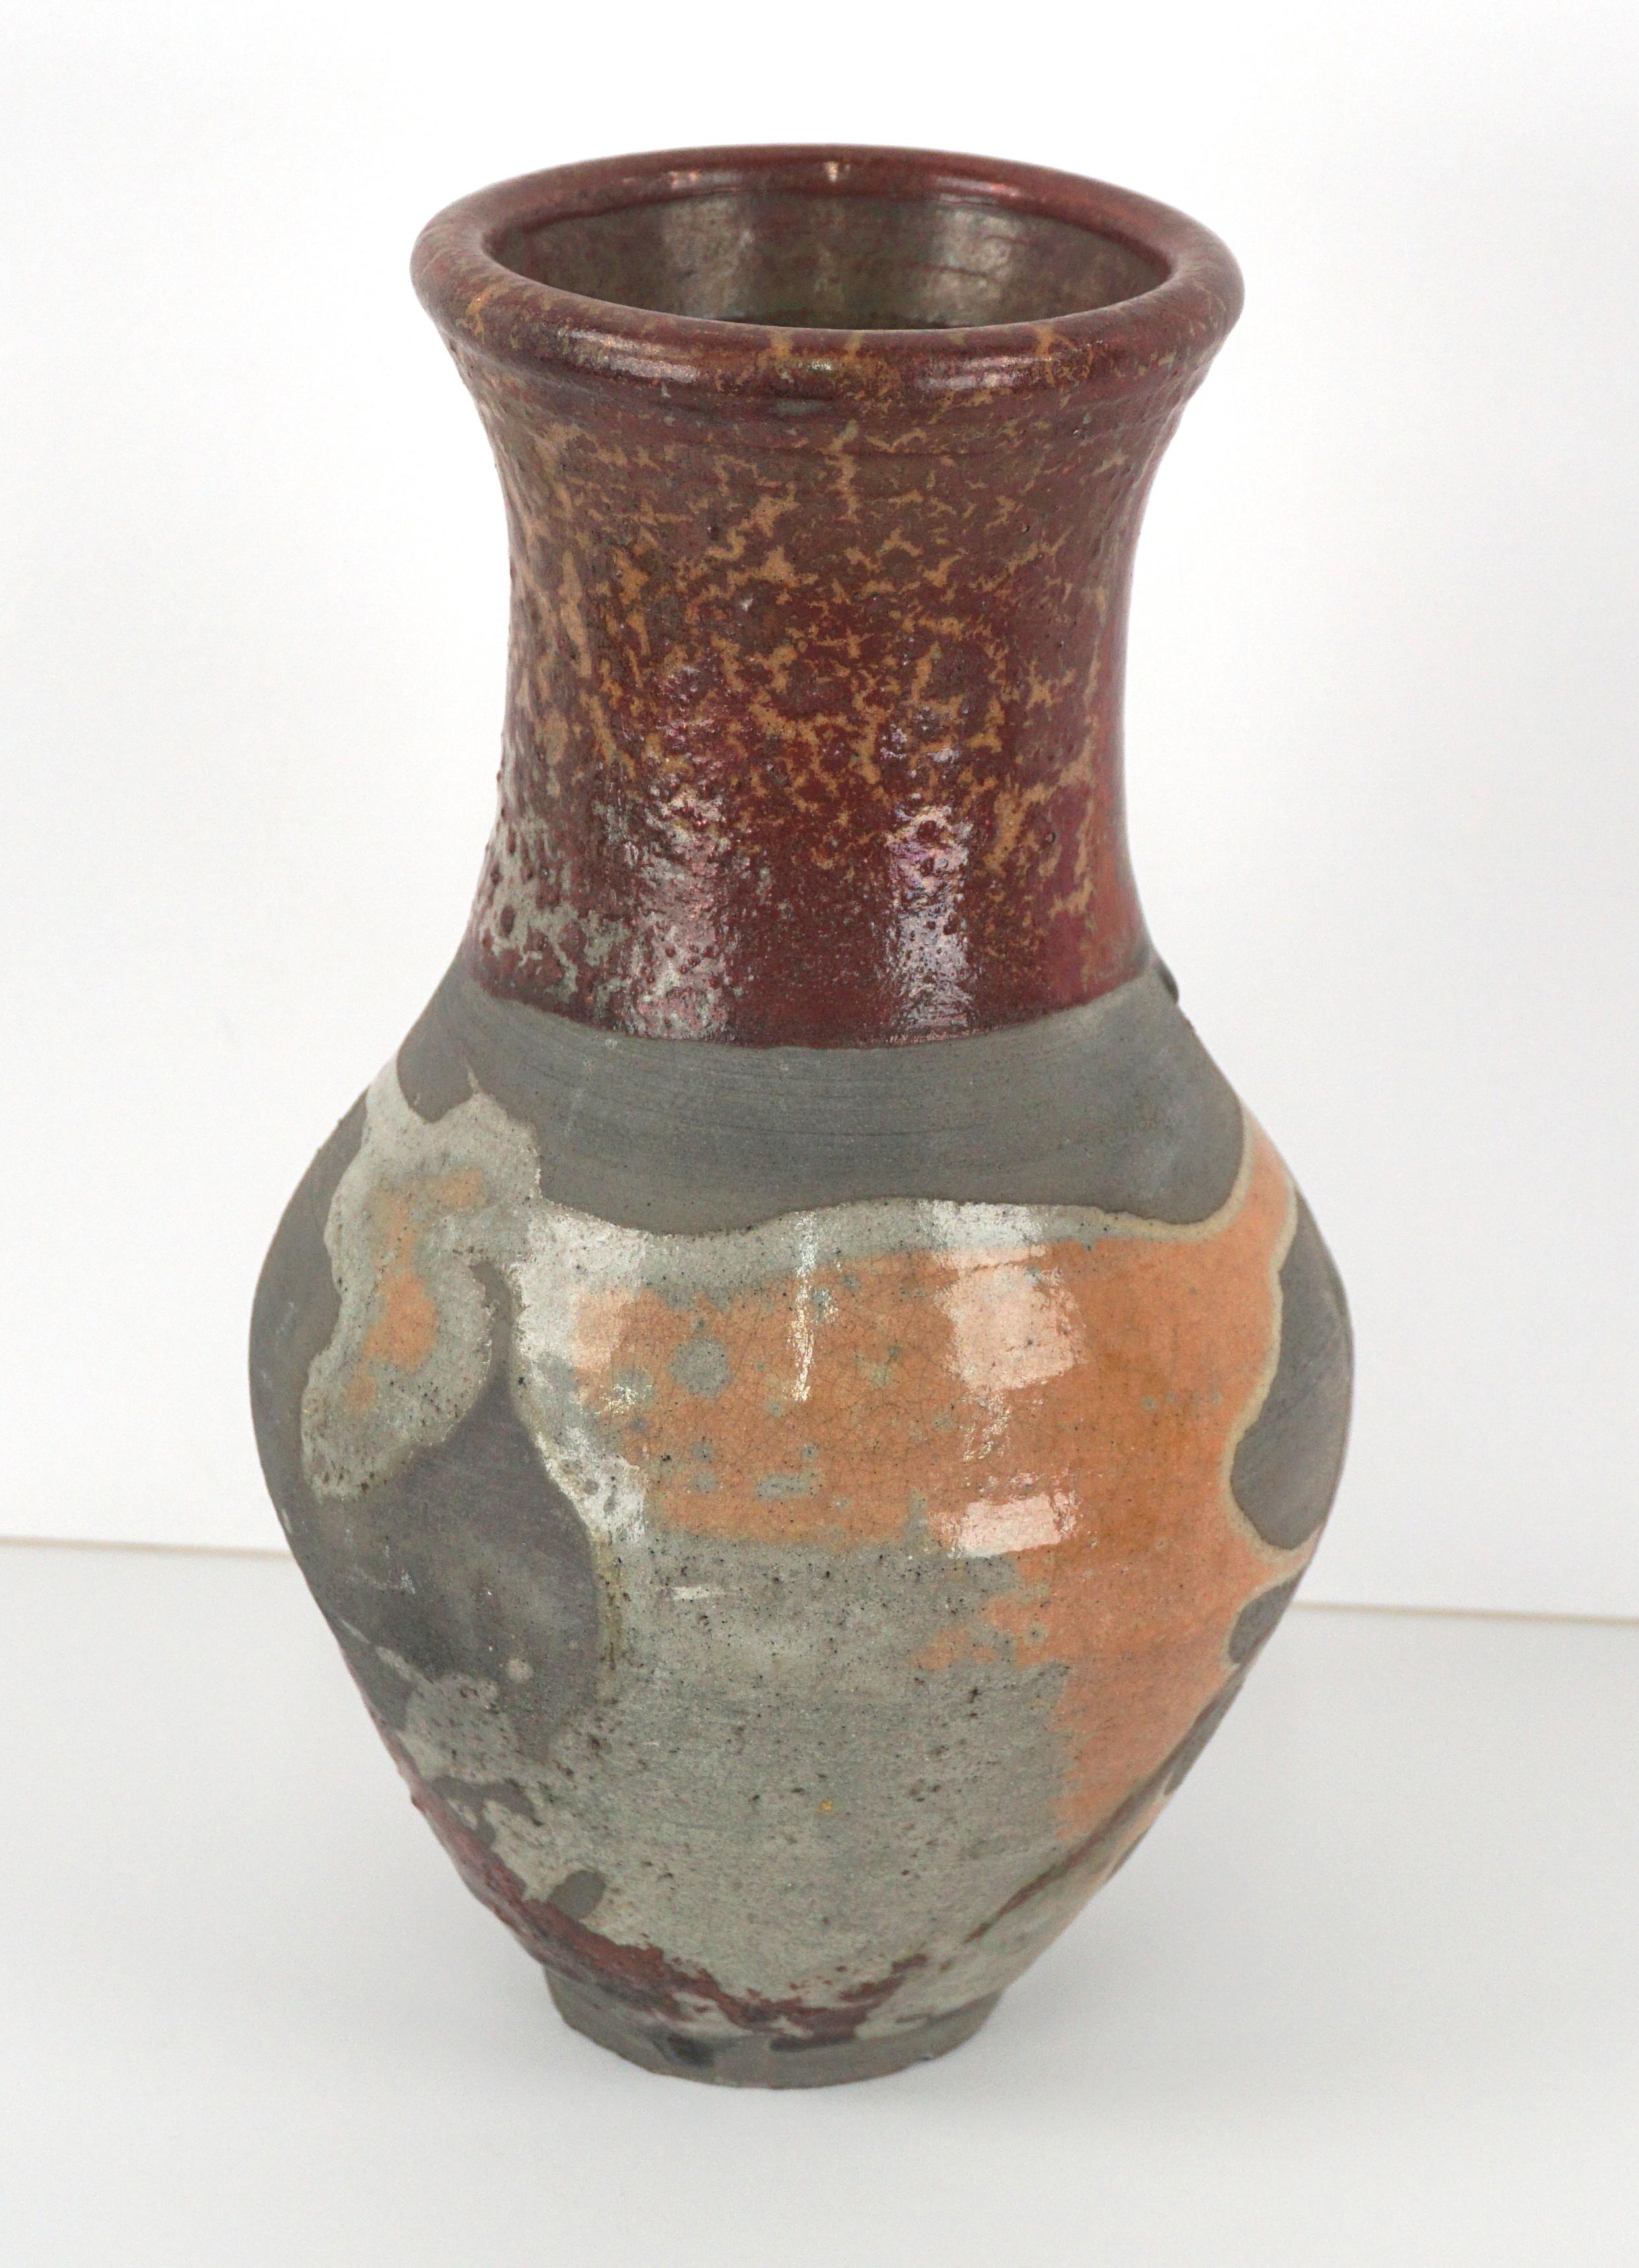 Dramatic raku style ceramic vase by ceramic artist Andy Ruble (American, b 1970). Metallic russet, grays and orange lend to earthy organic aesthetic. Signed on bottom. Size: 9.25